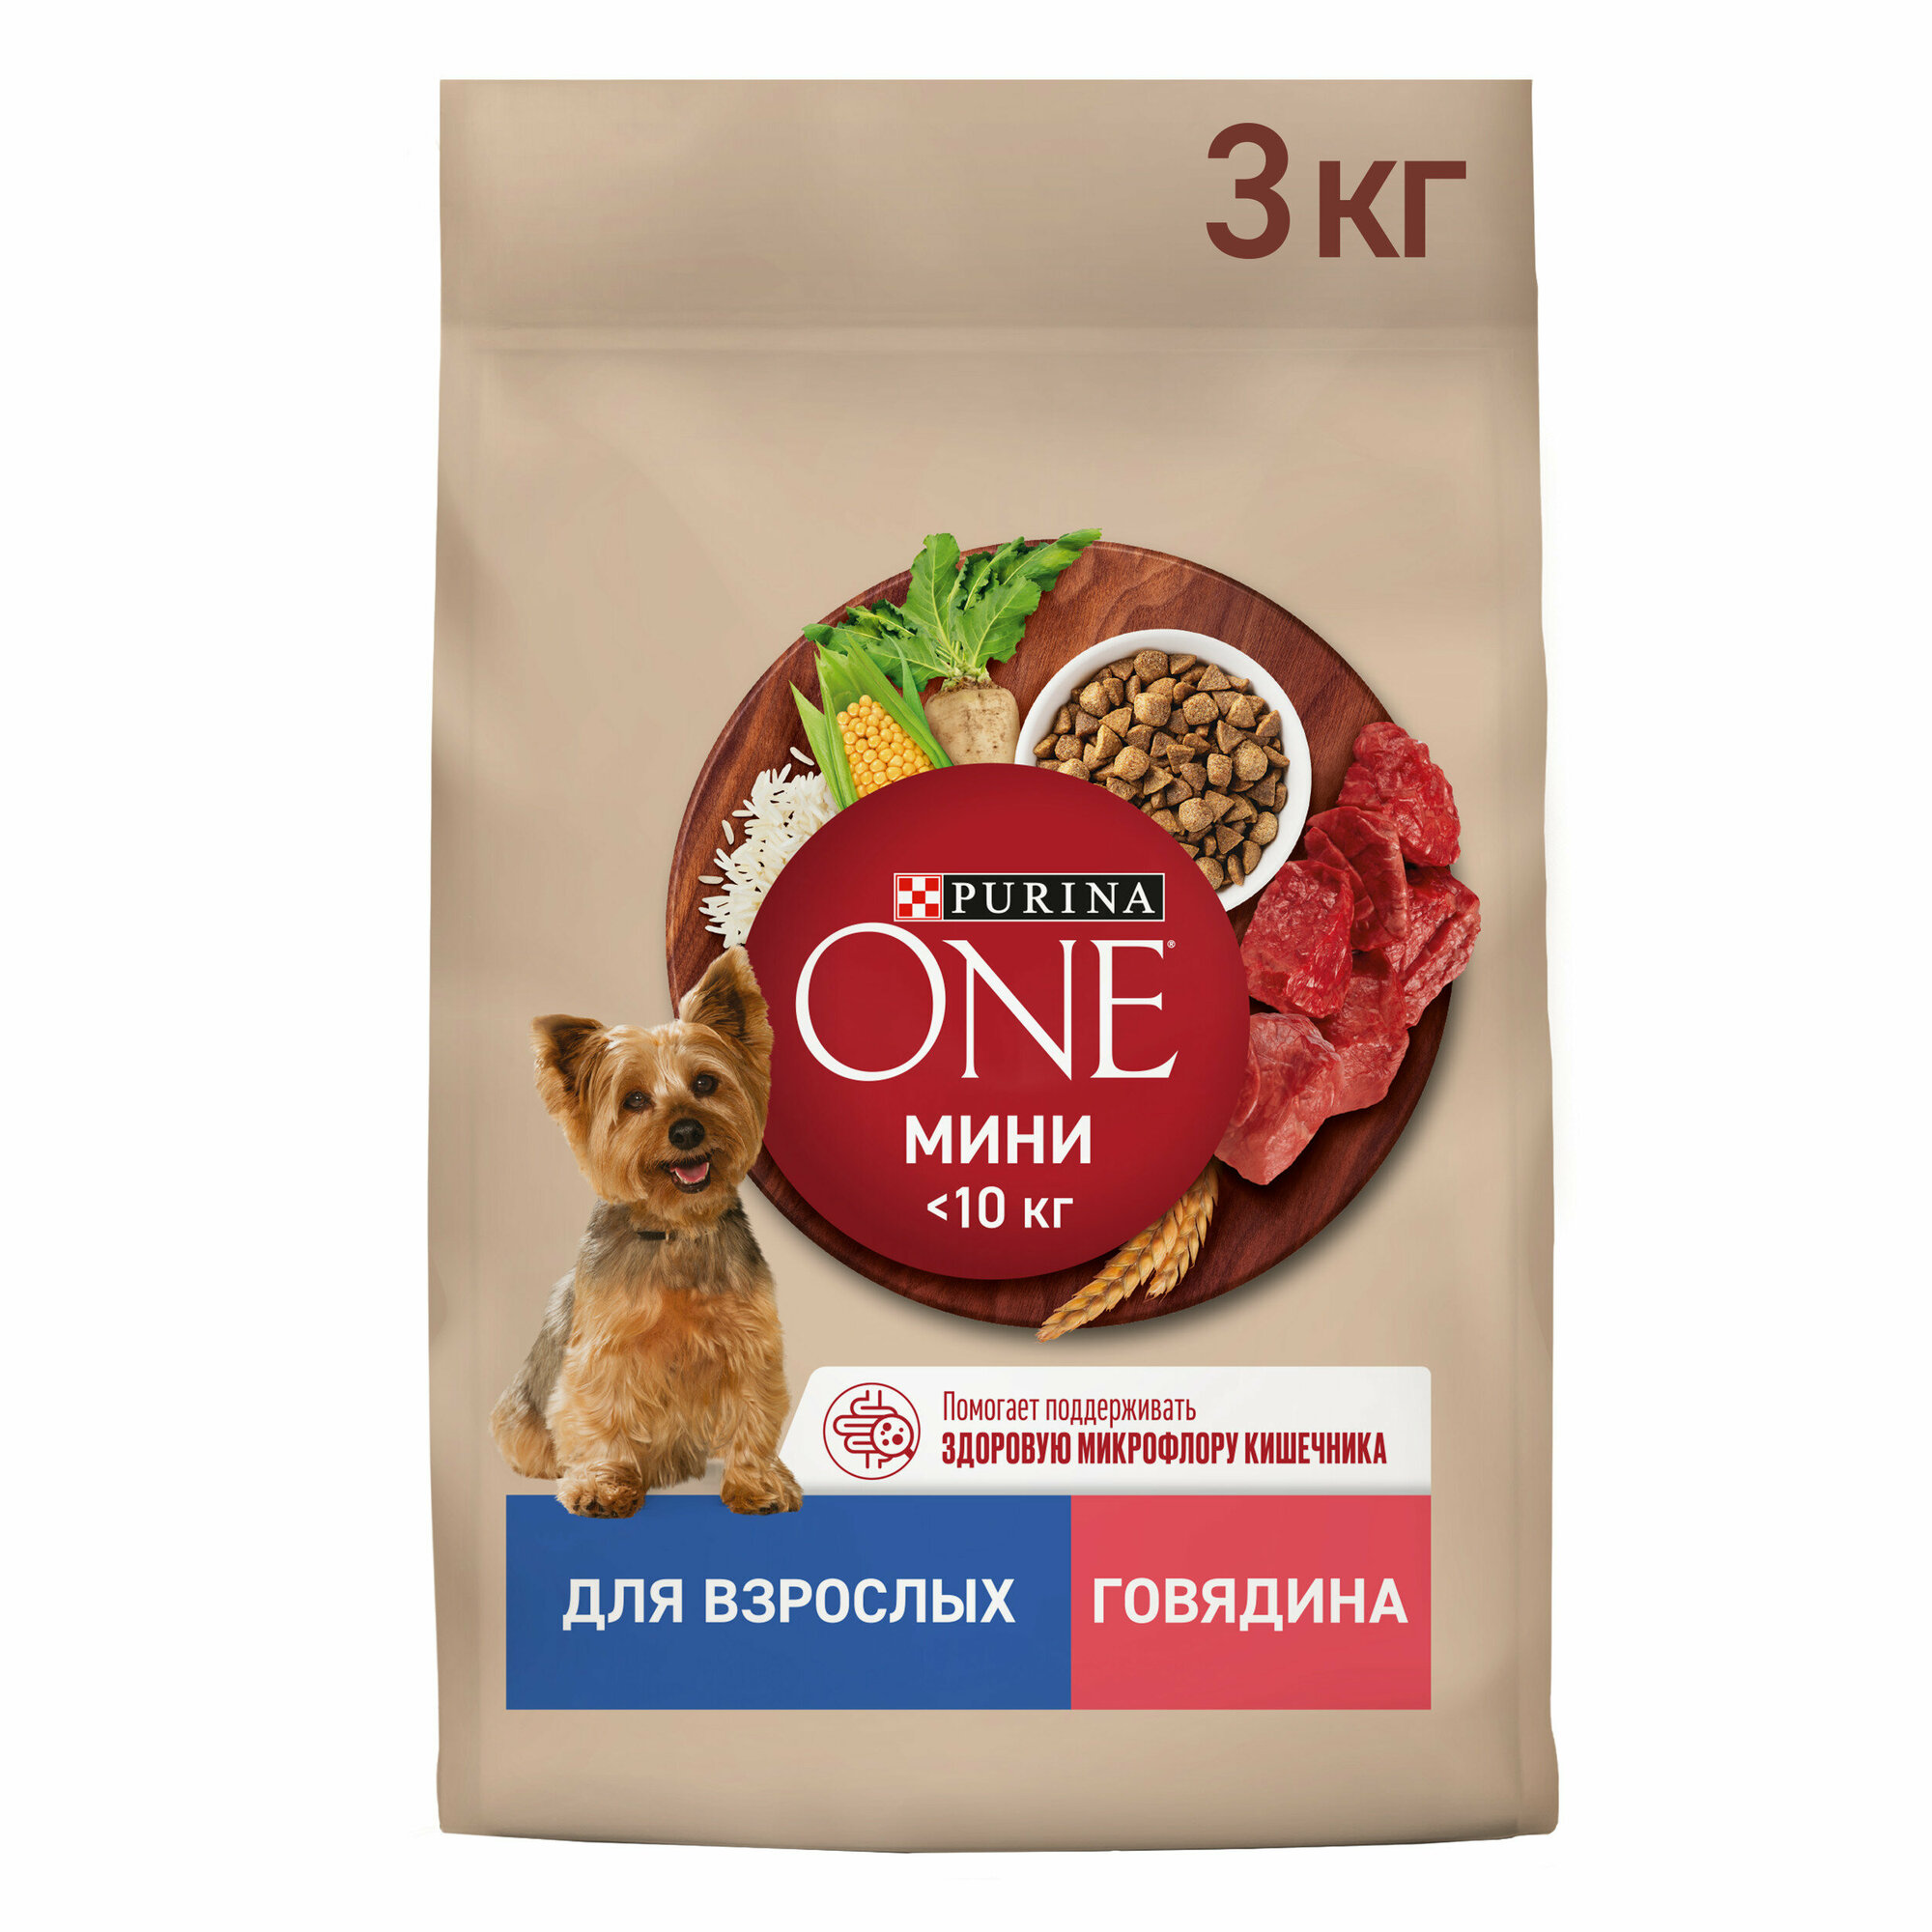 Purina One Mini корм для взрослых собак, говядина и рис 3 кг